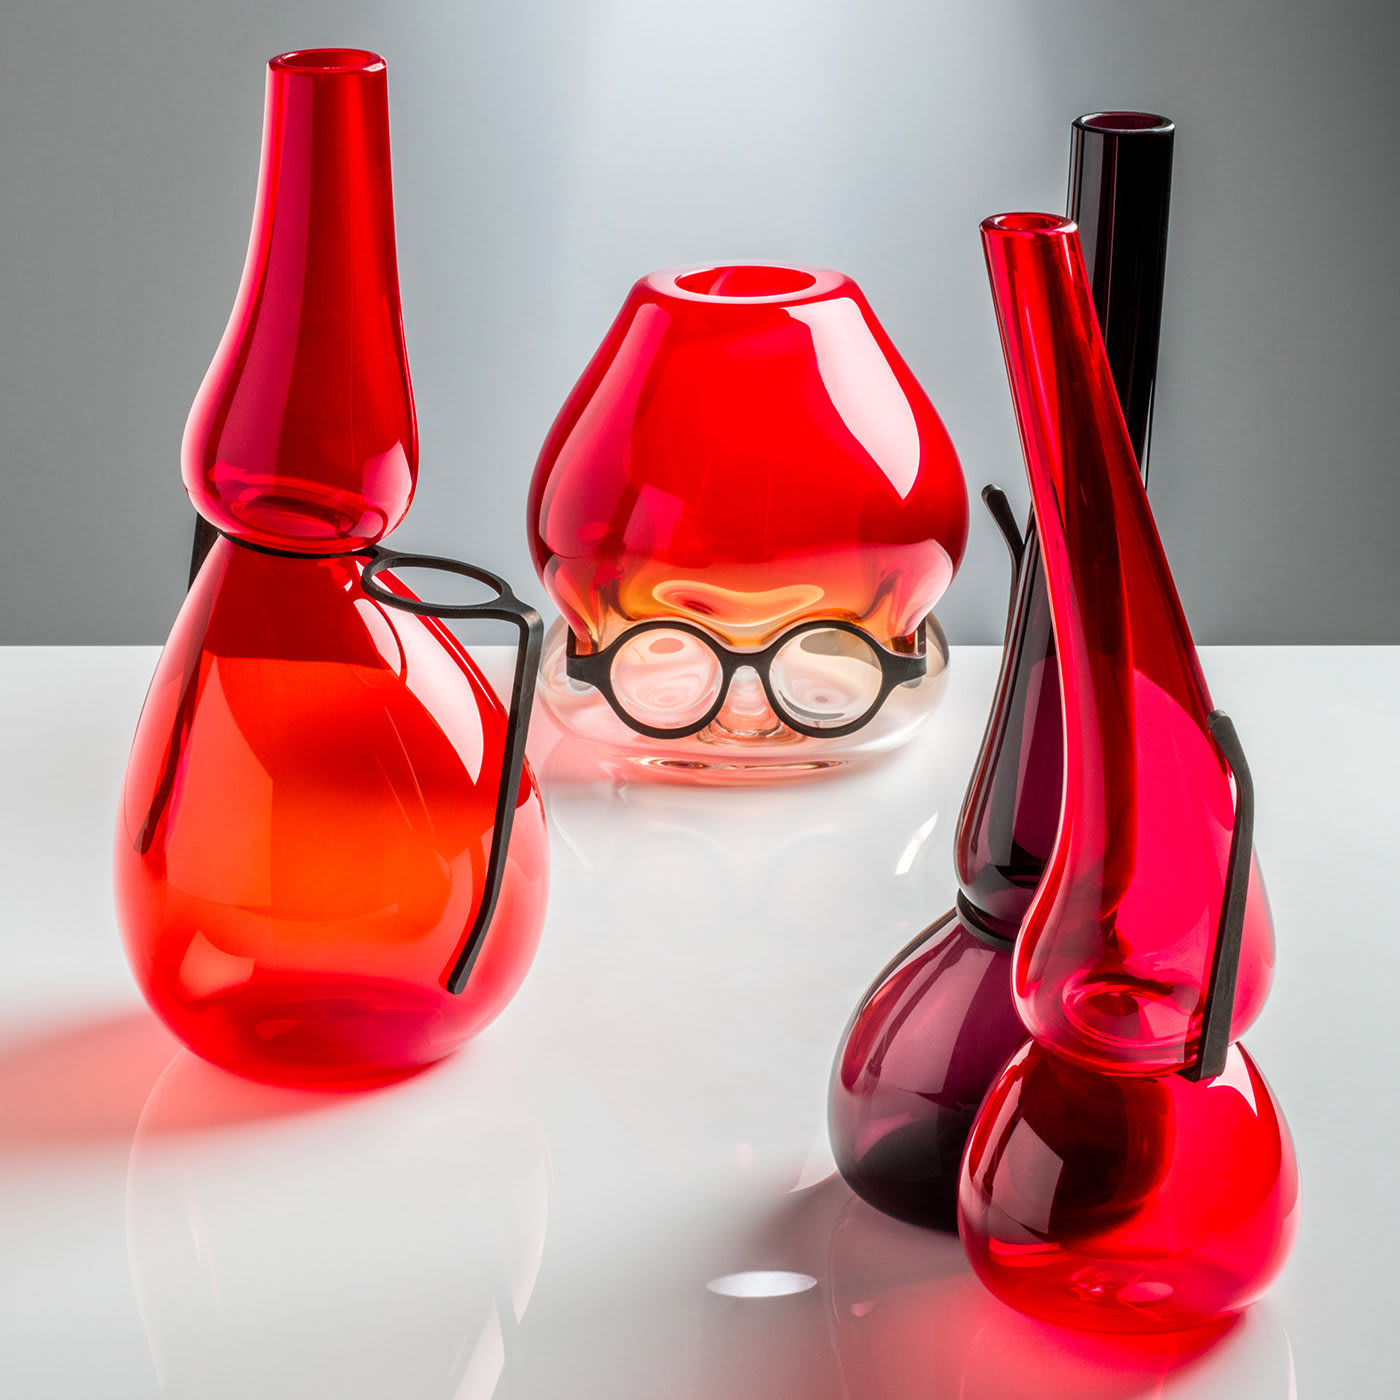 Where Are My Glasses? Single Lens Vase by Ron Arad Studio # 3 - Venini